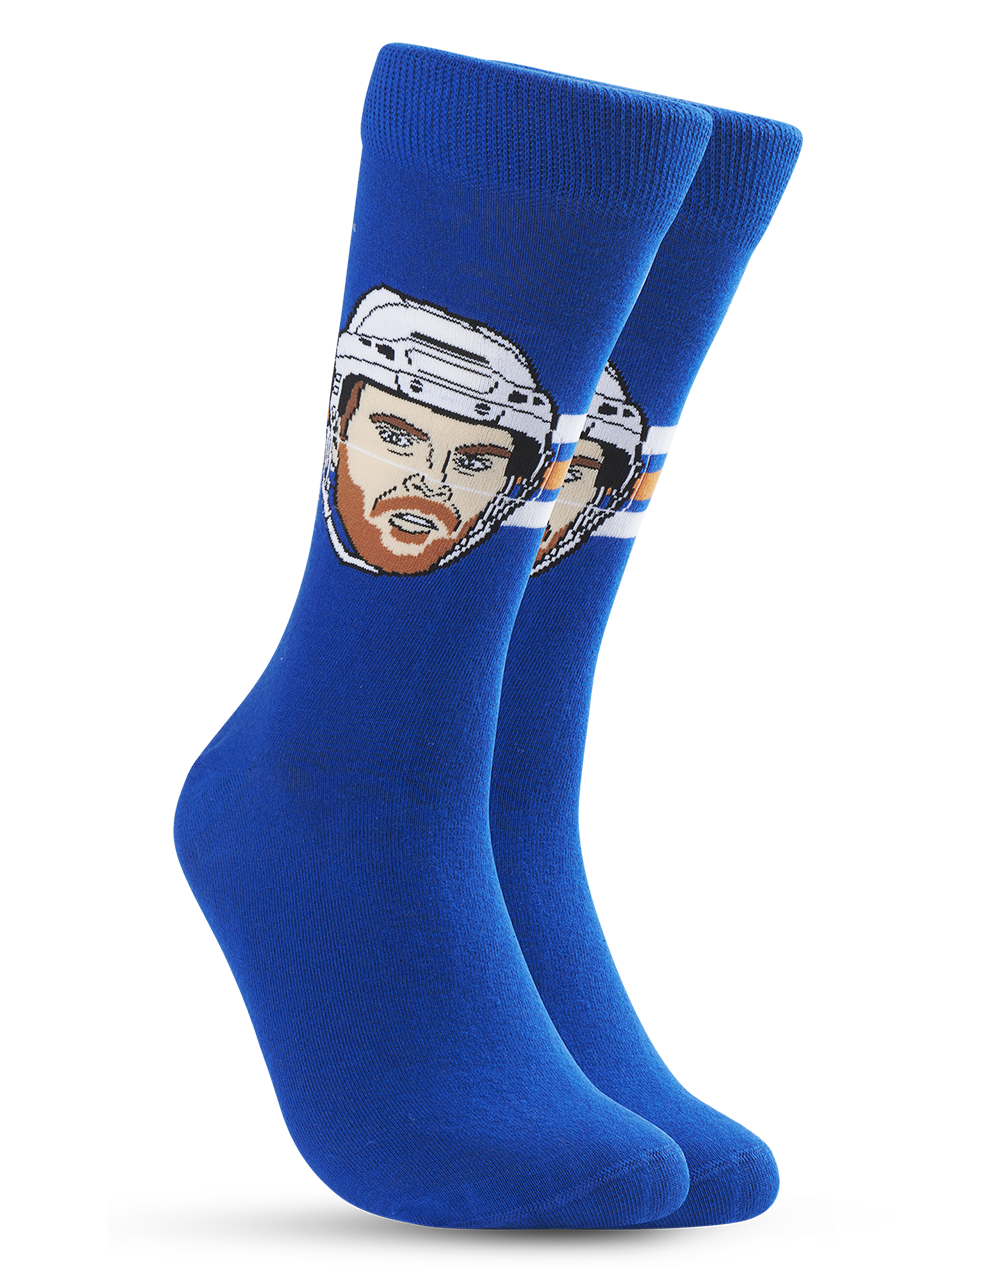 Connor McDavid Socks